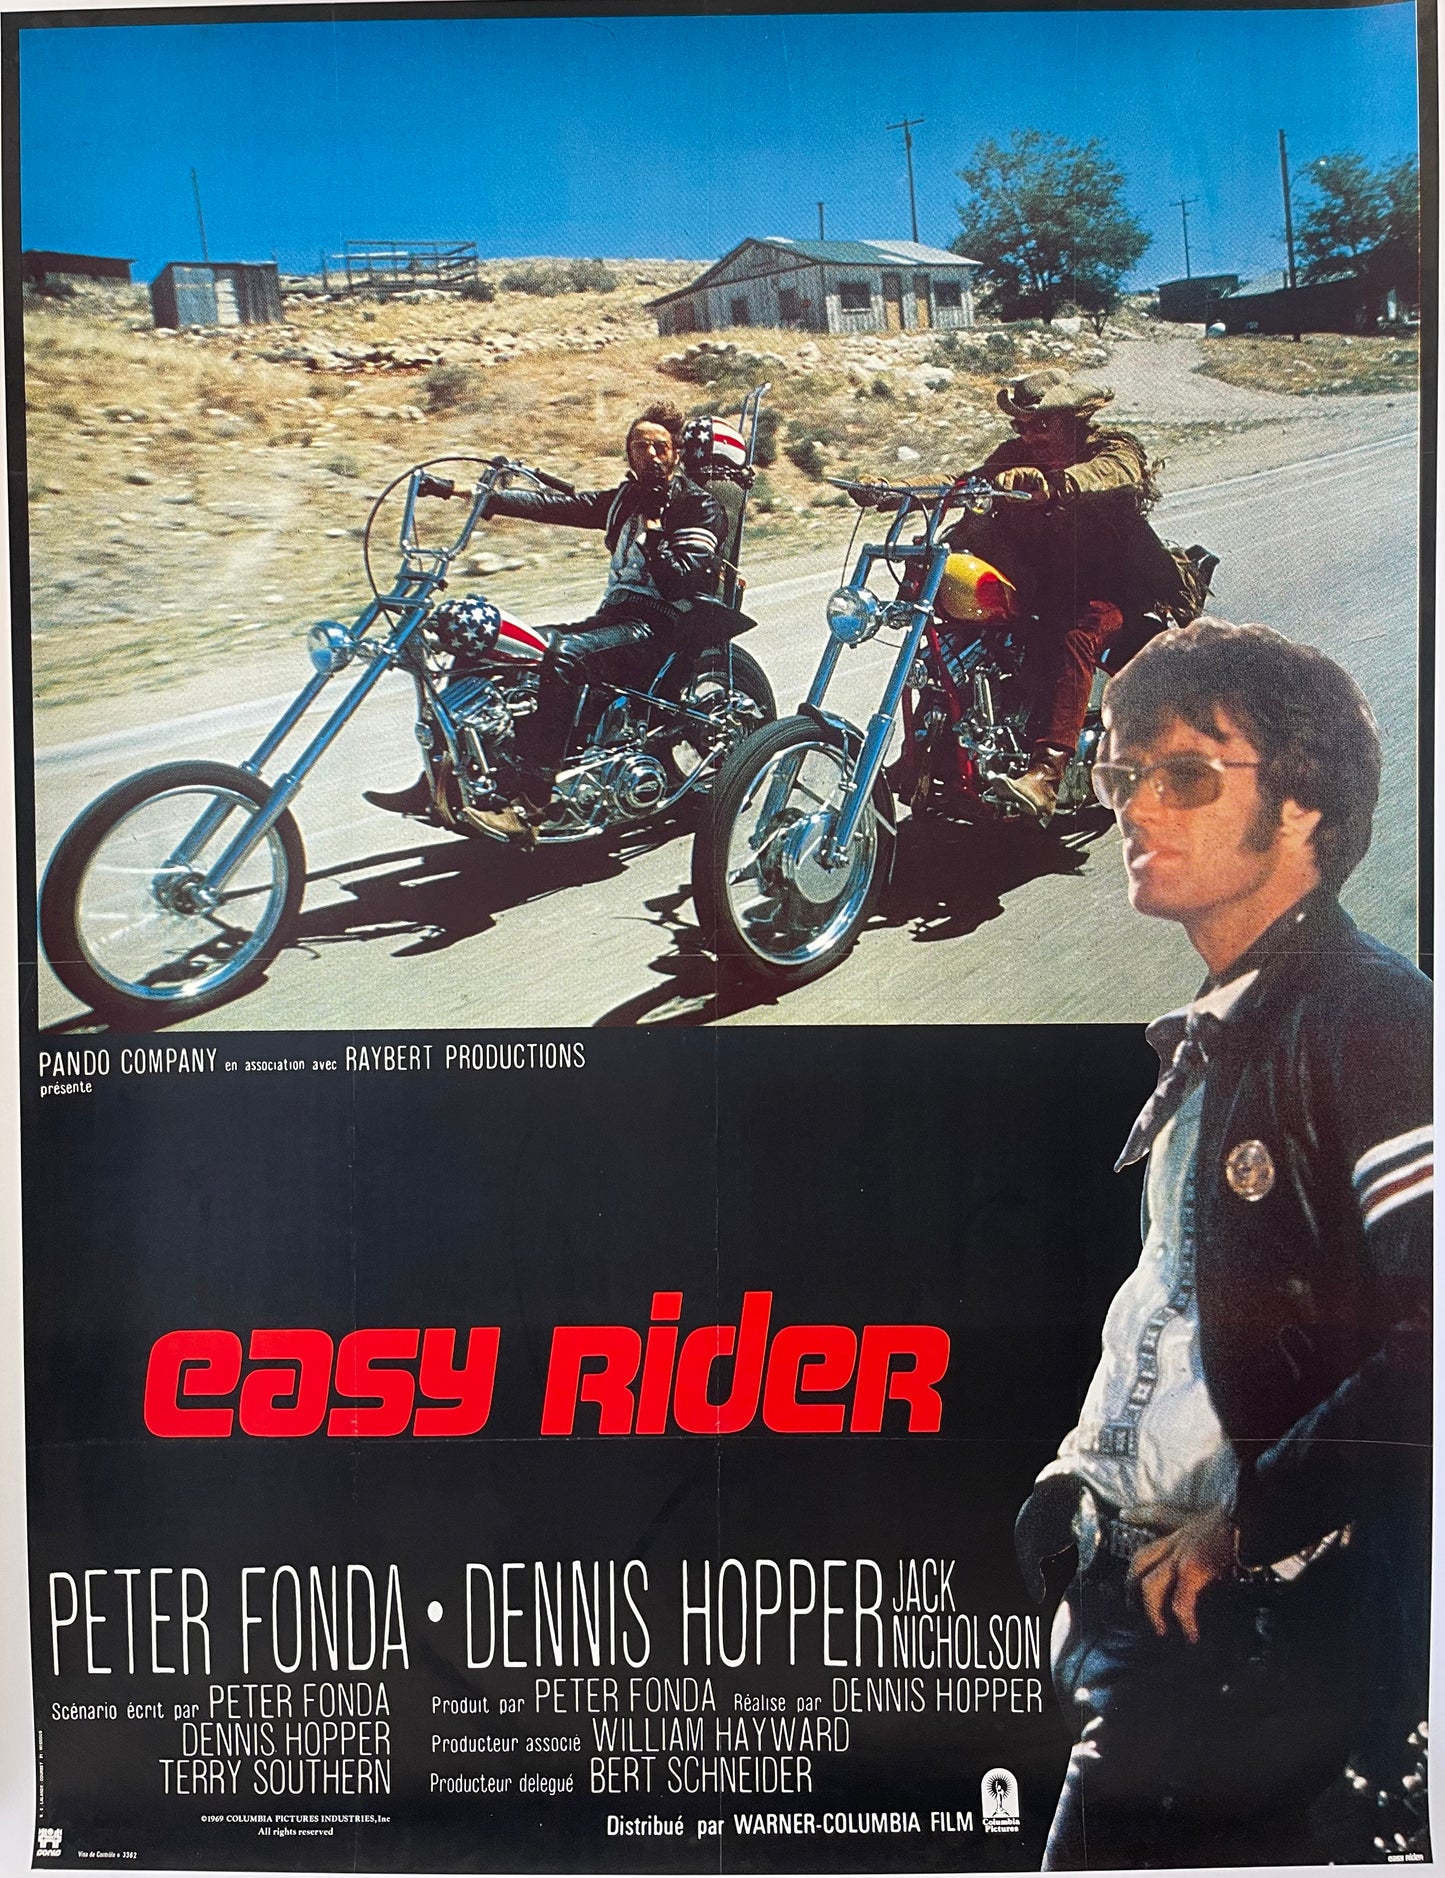 Easy Rider Original Film Poster